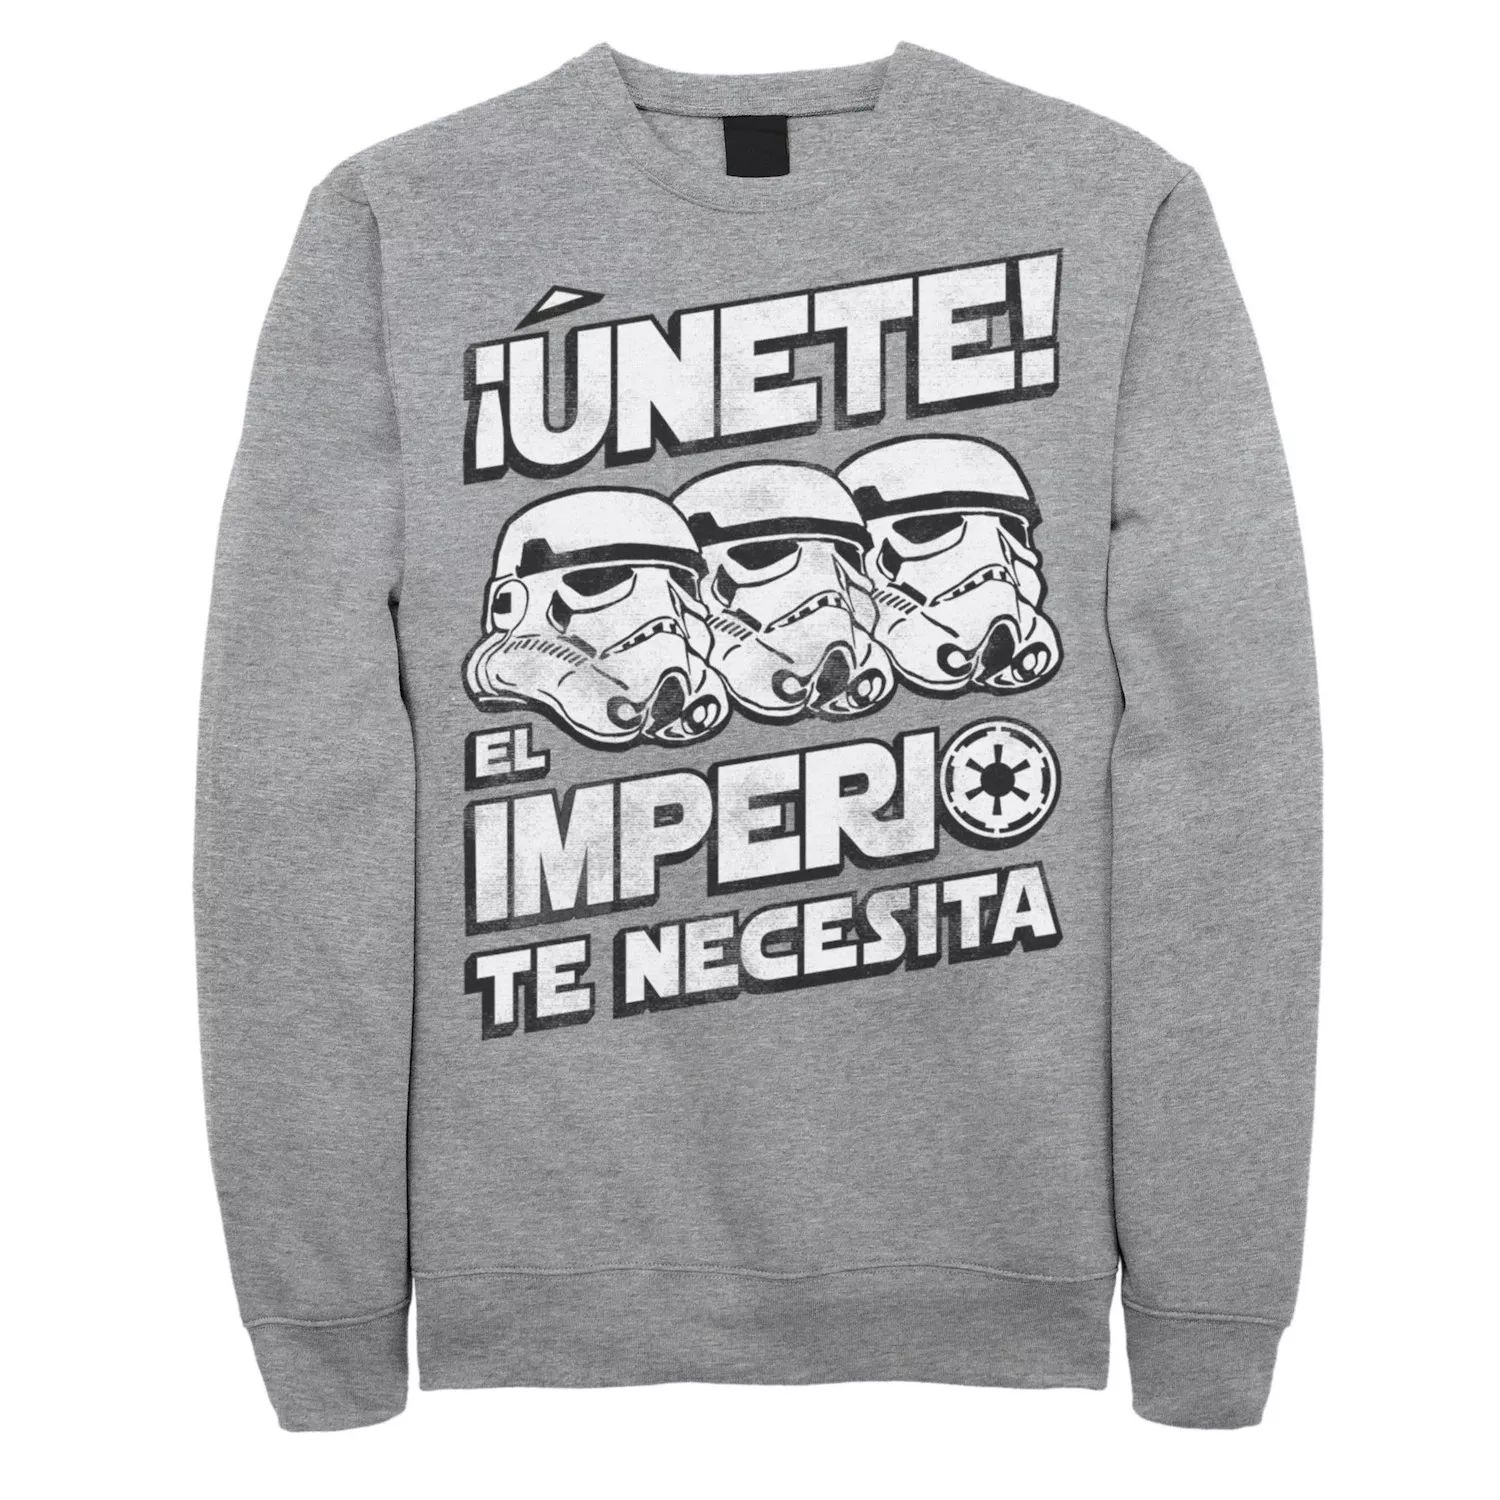 Мужской свитшот с выцветшим портретом «Звездные войны» Unete El Imperio Te Necesita Stormtrooper Licensed Character